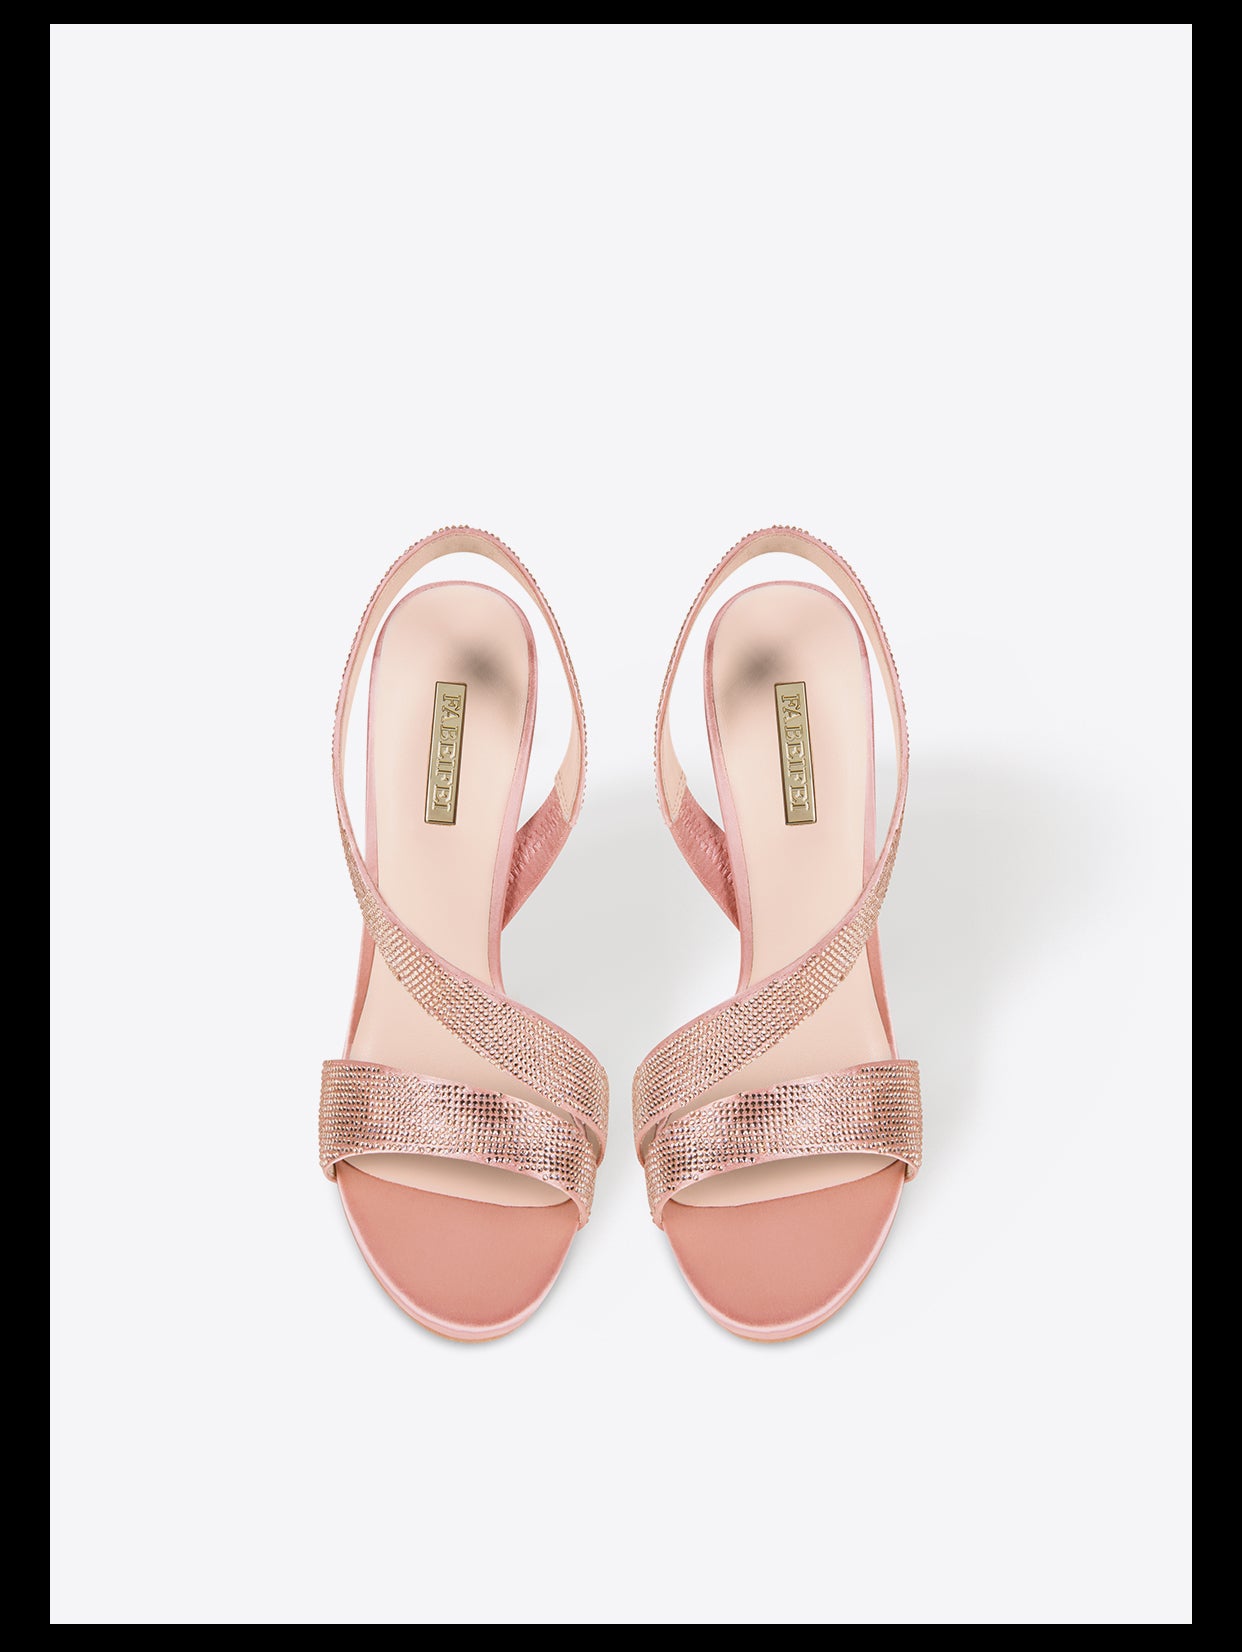 Rhinestone stiletto open toe high heels sandals